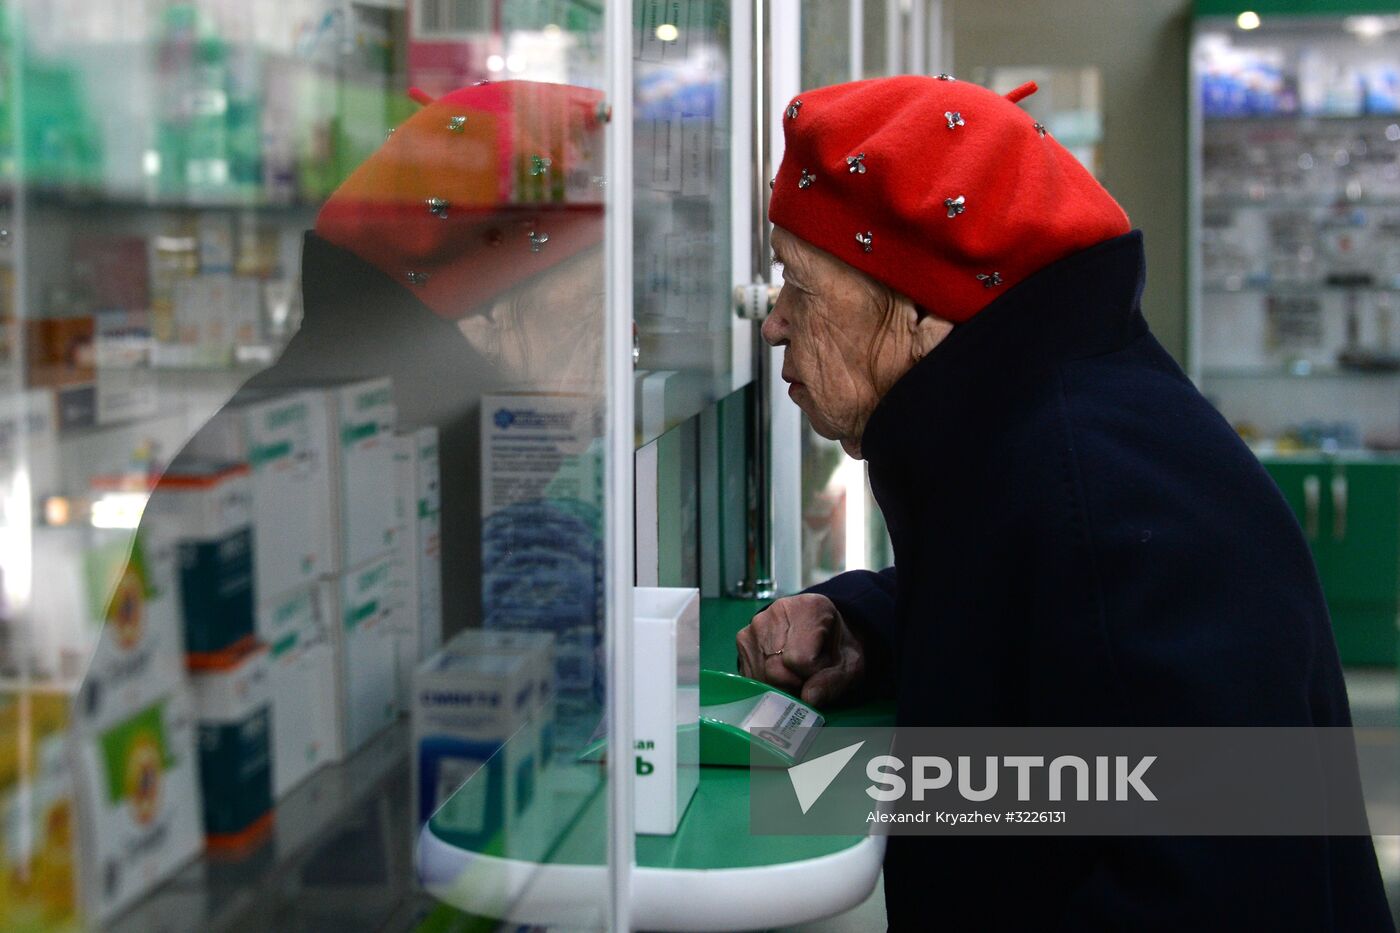 Pharmacies in Novosibirsk